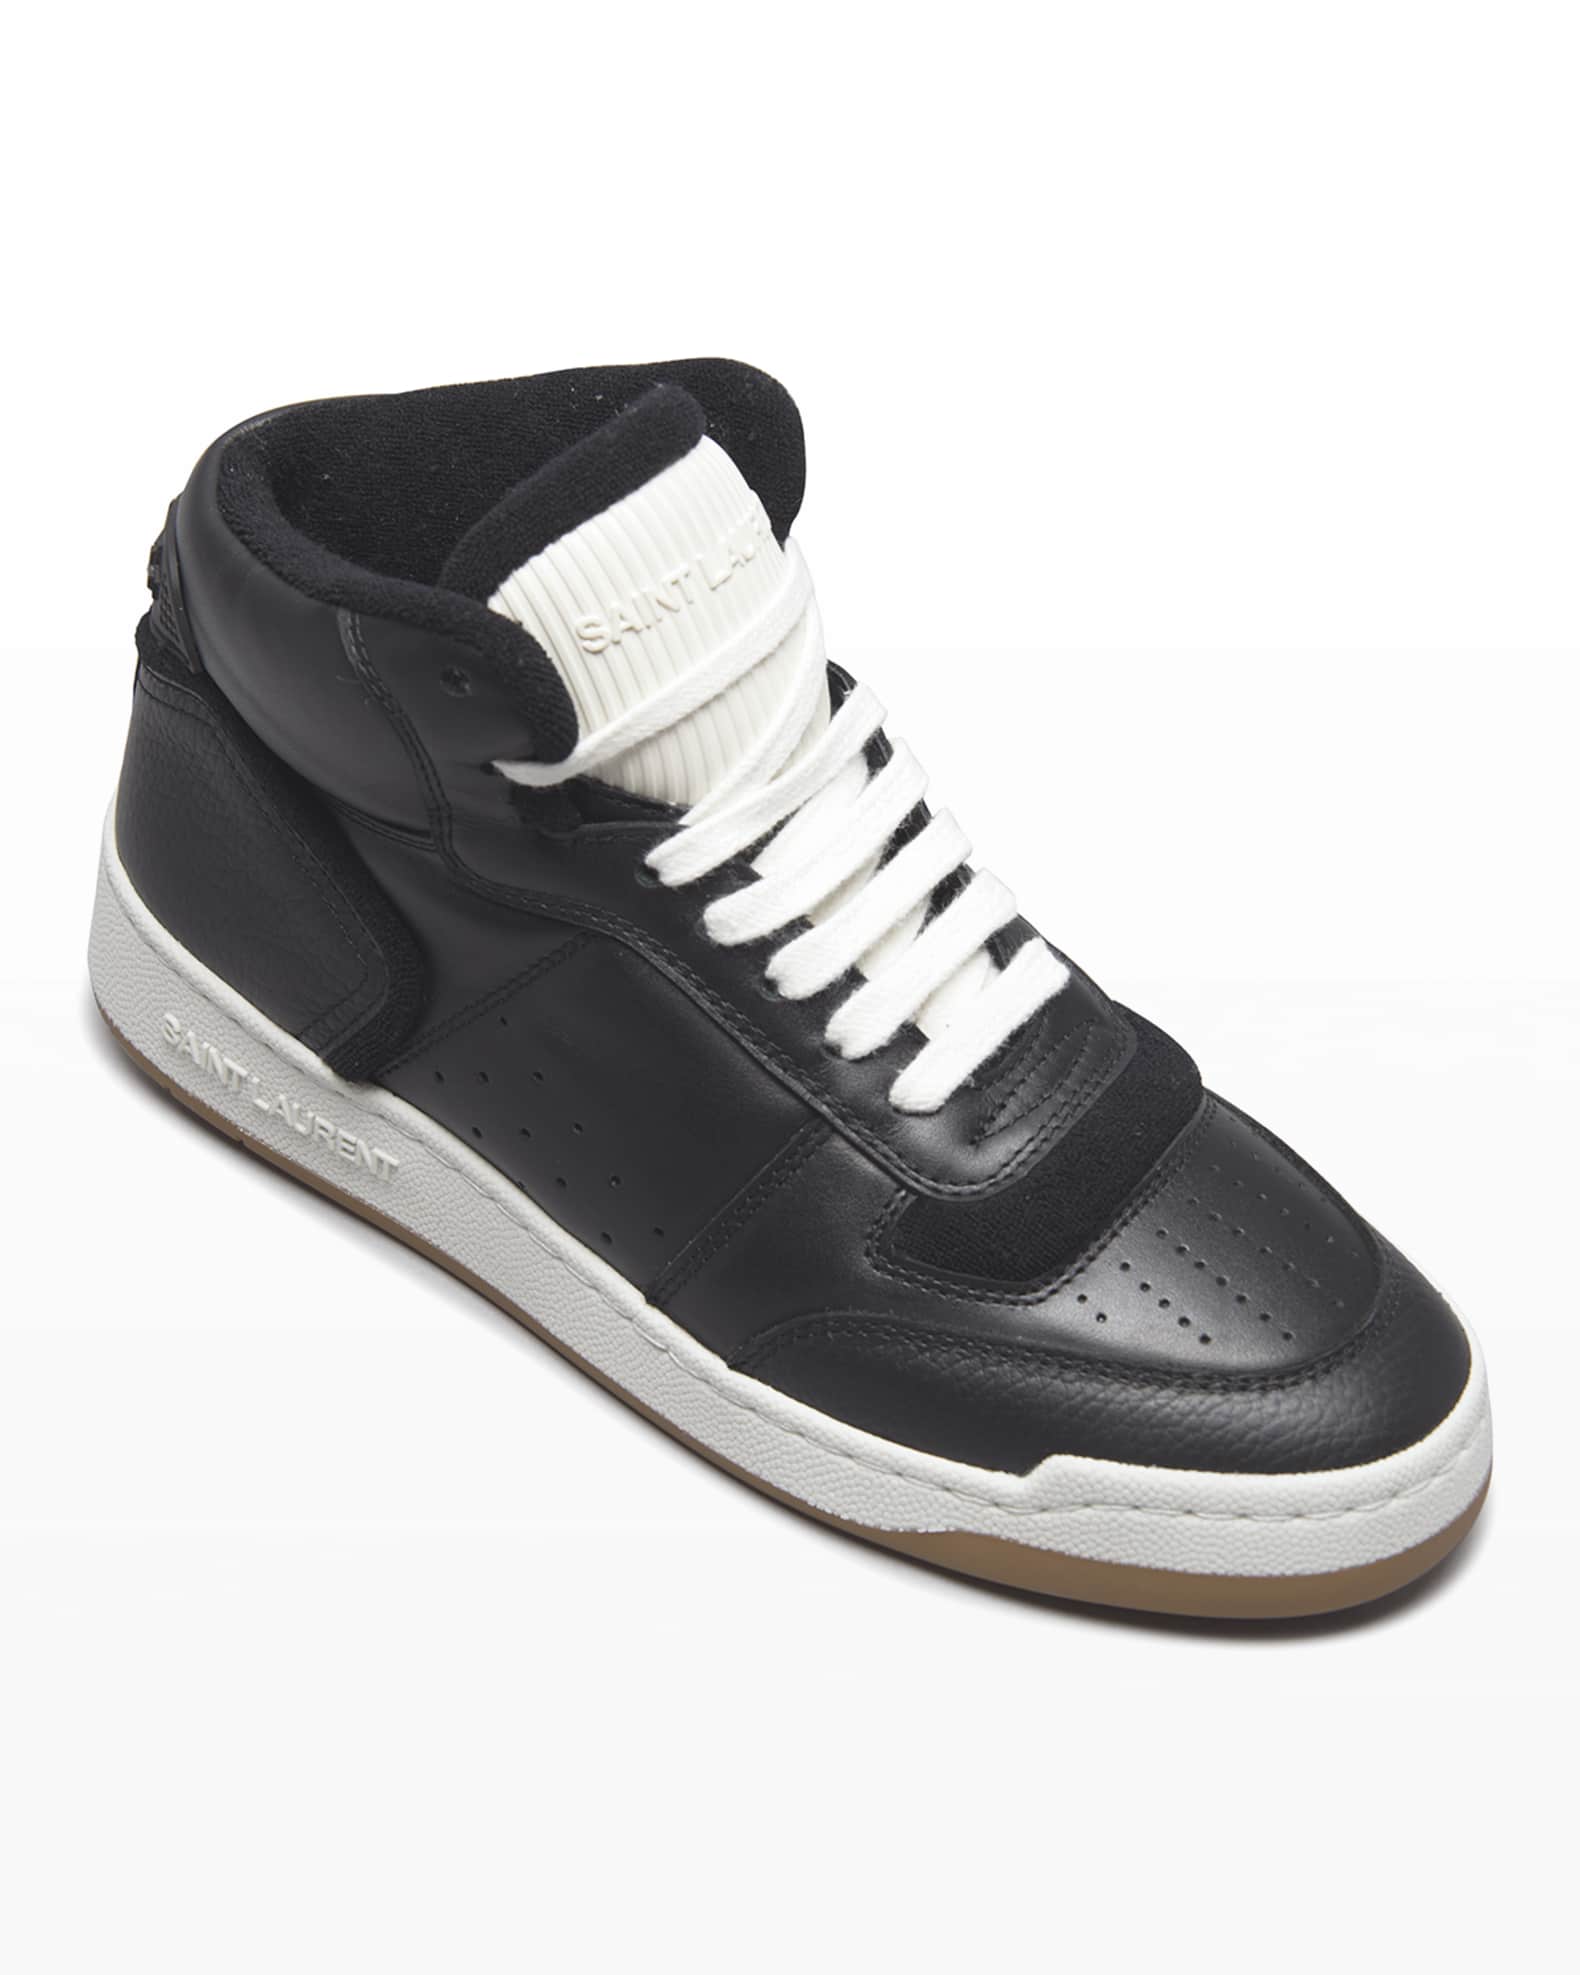 Saint Laurent SL80 Leather High-Top Court Sneakers | Neiman Marcus